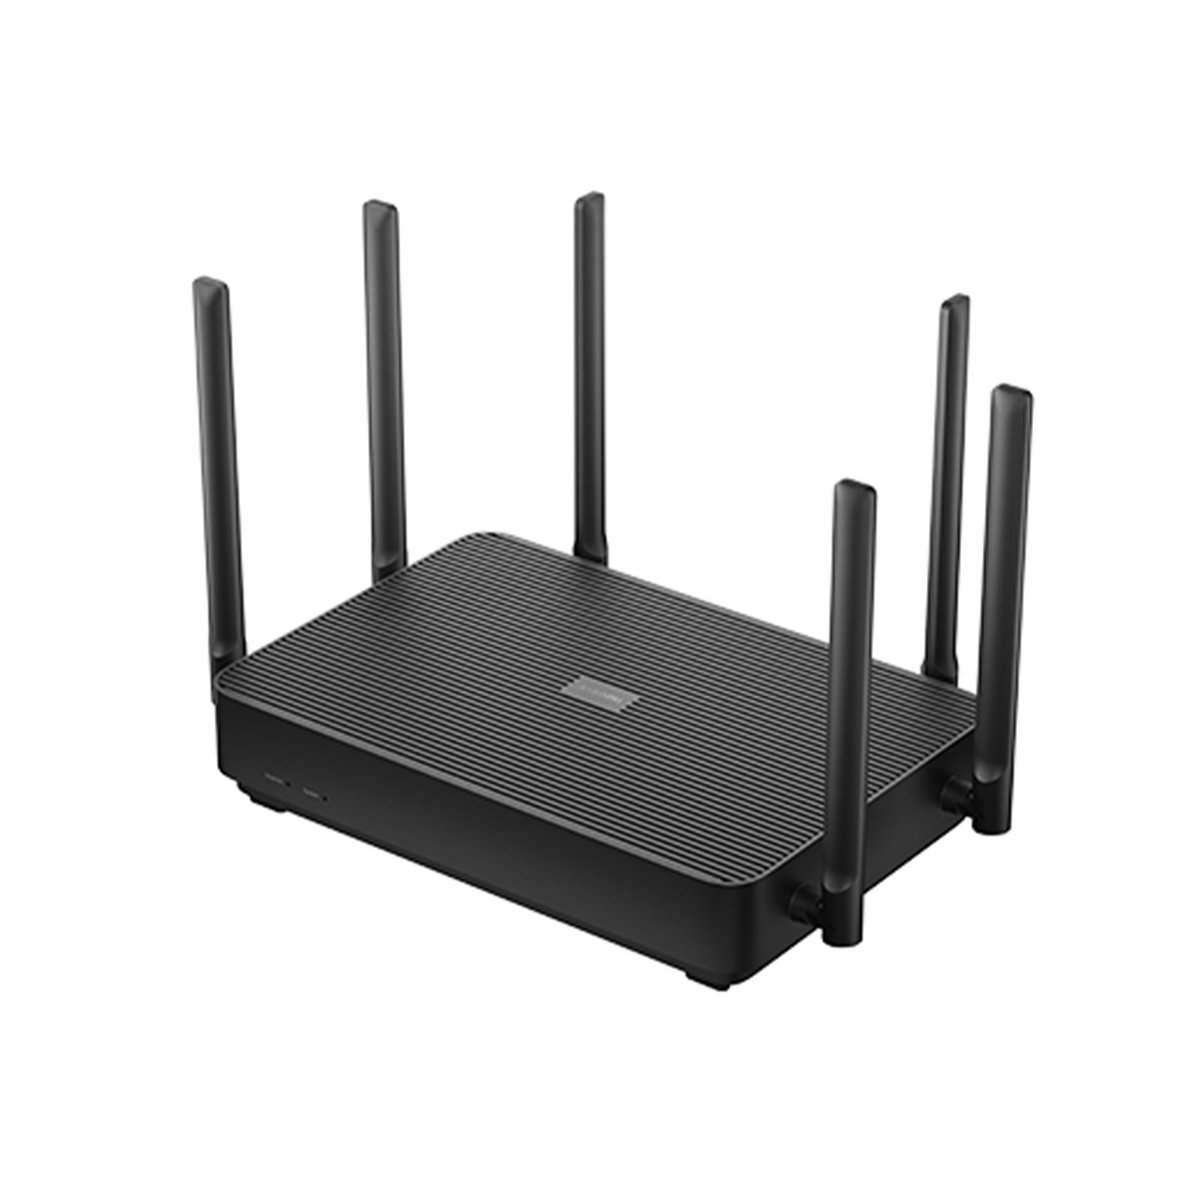 Mi Wireless Router AX3200